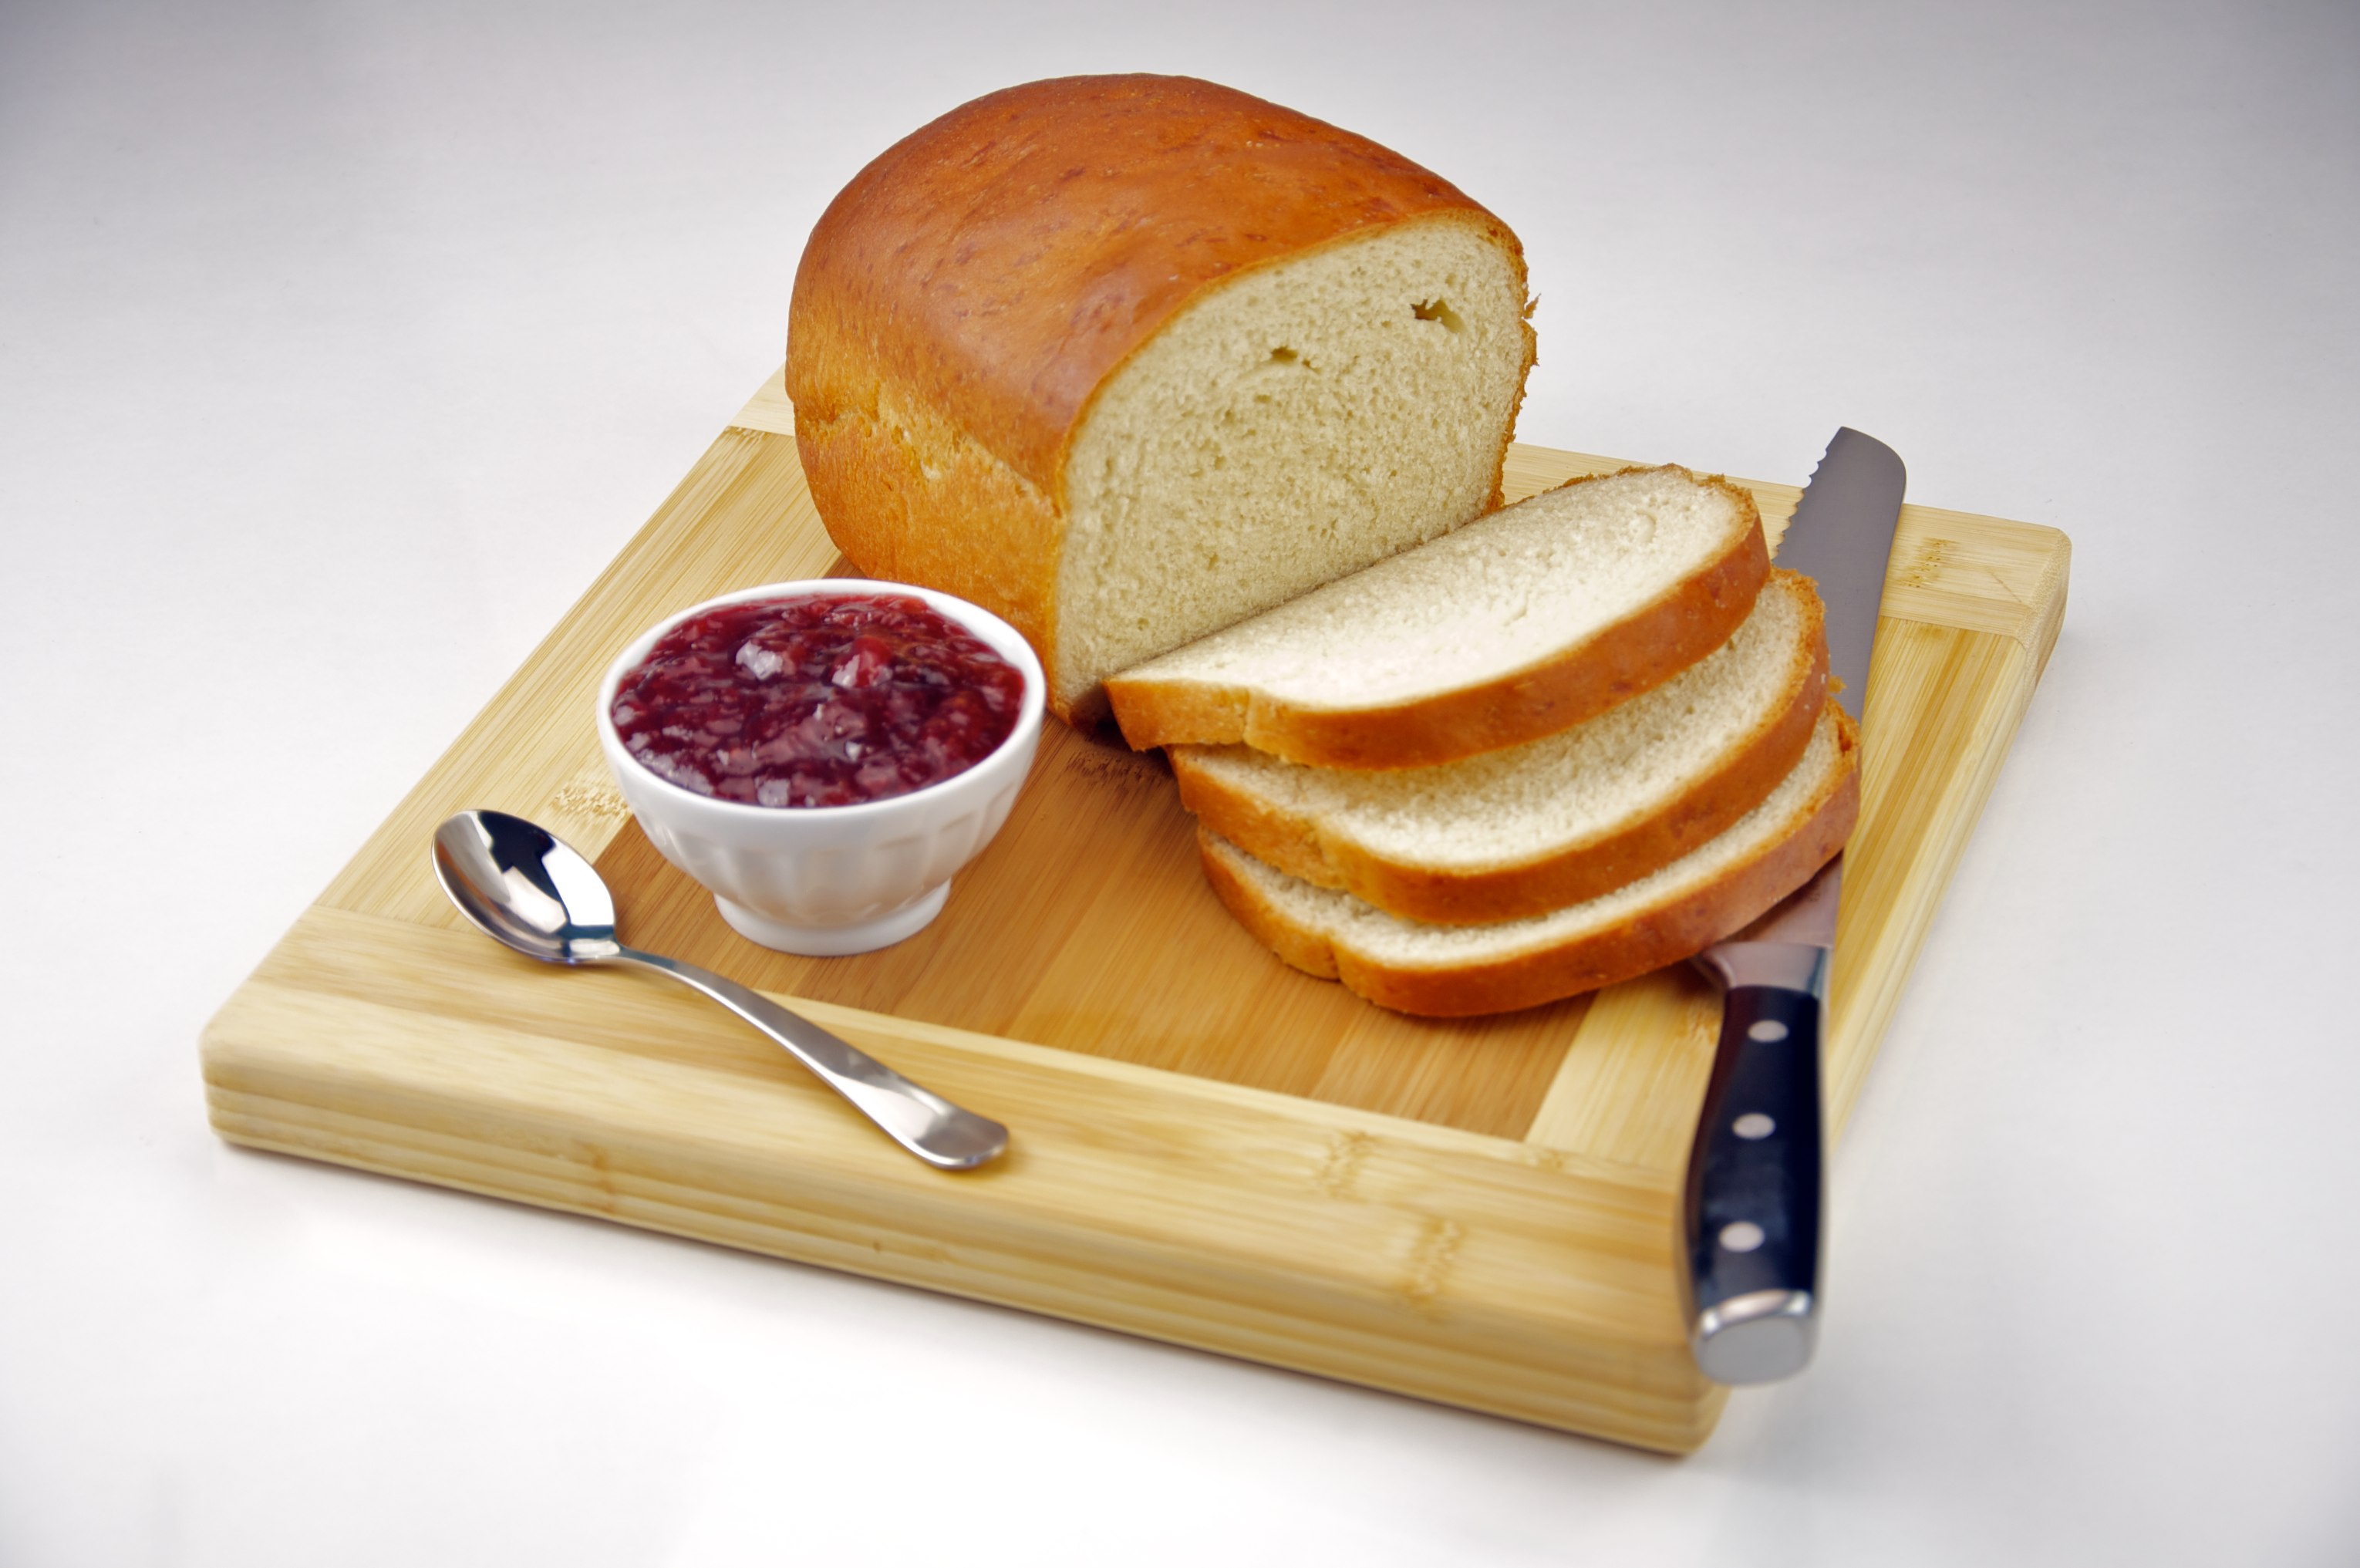 File:Homemade White Bread with Strawberry Jam.jpg - Wikimedia Commons